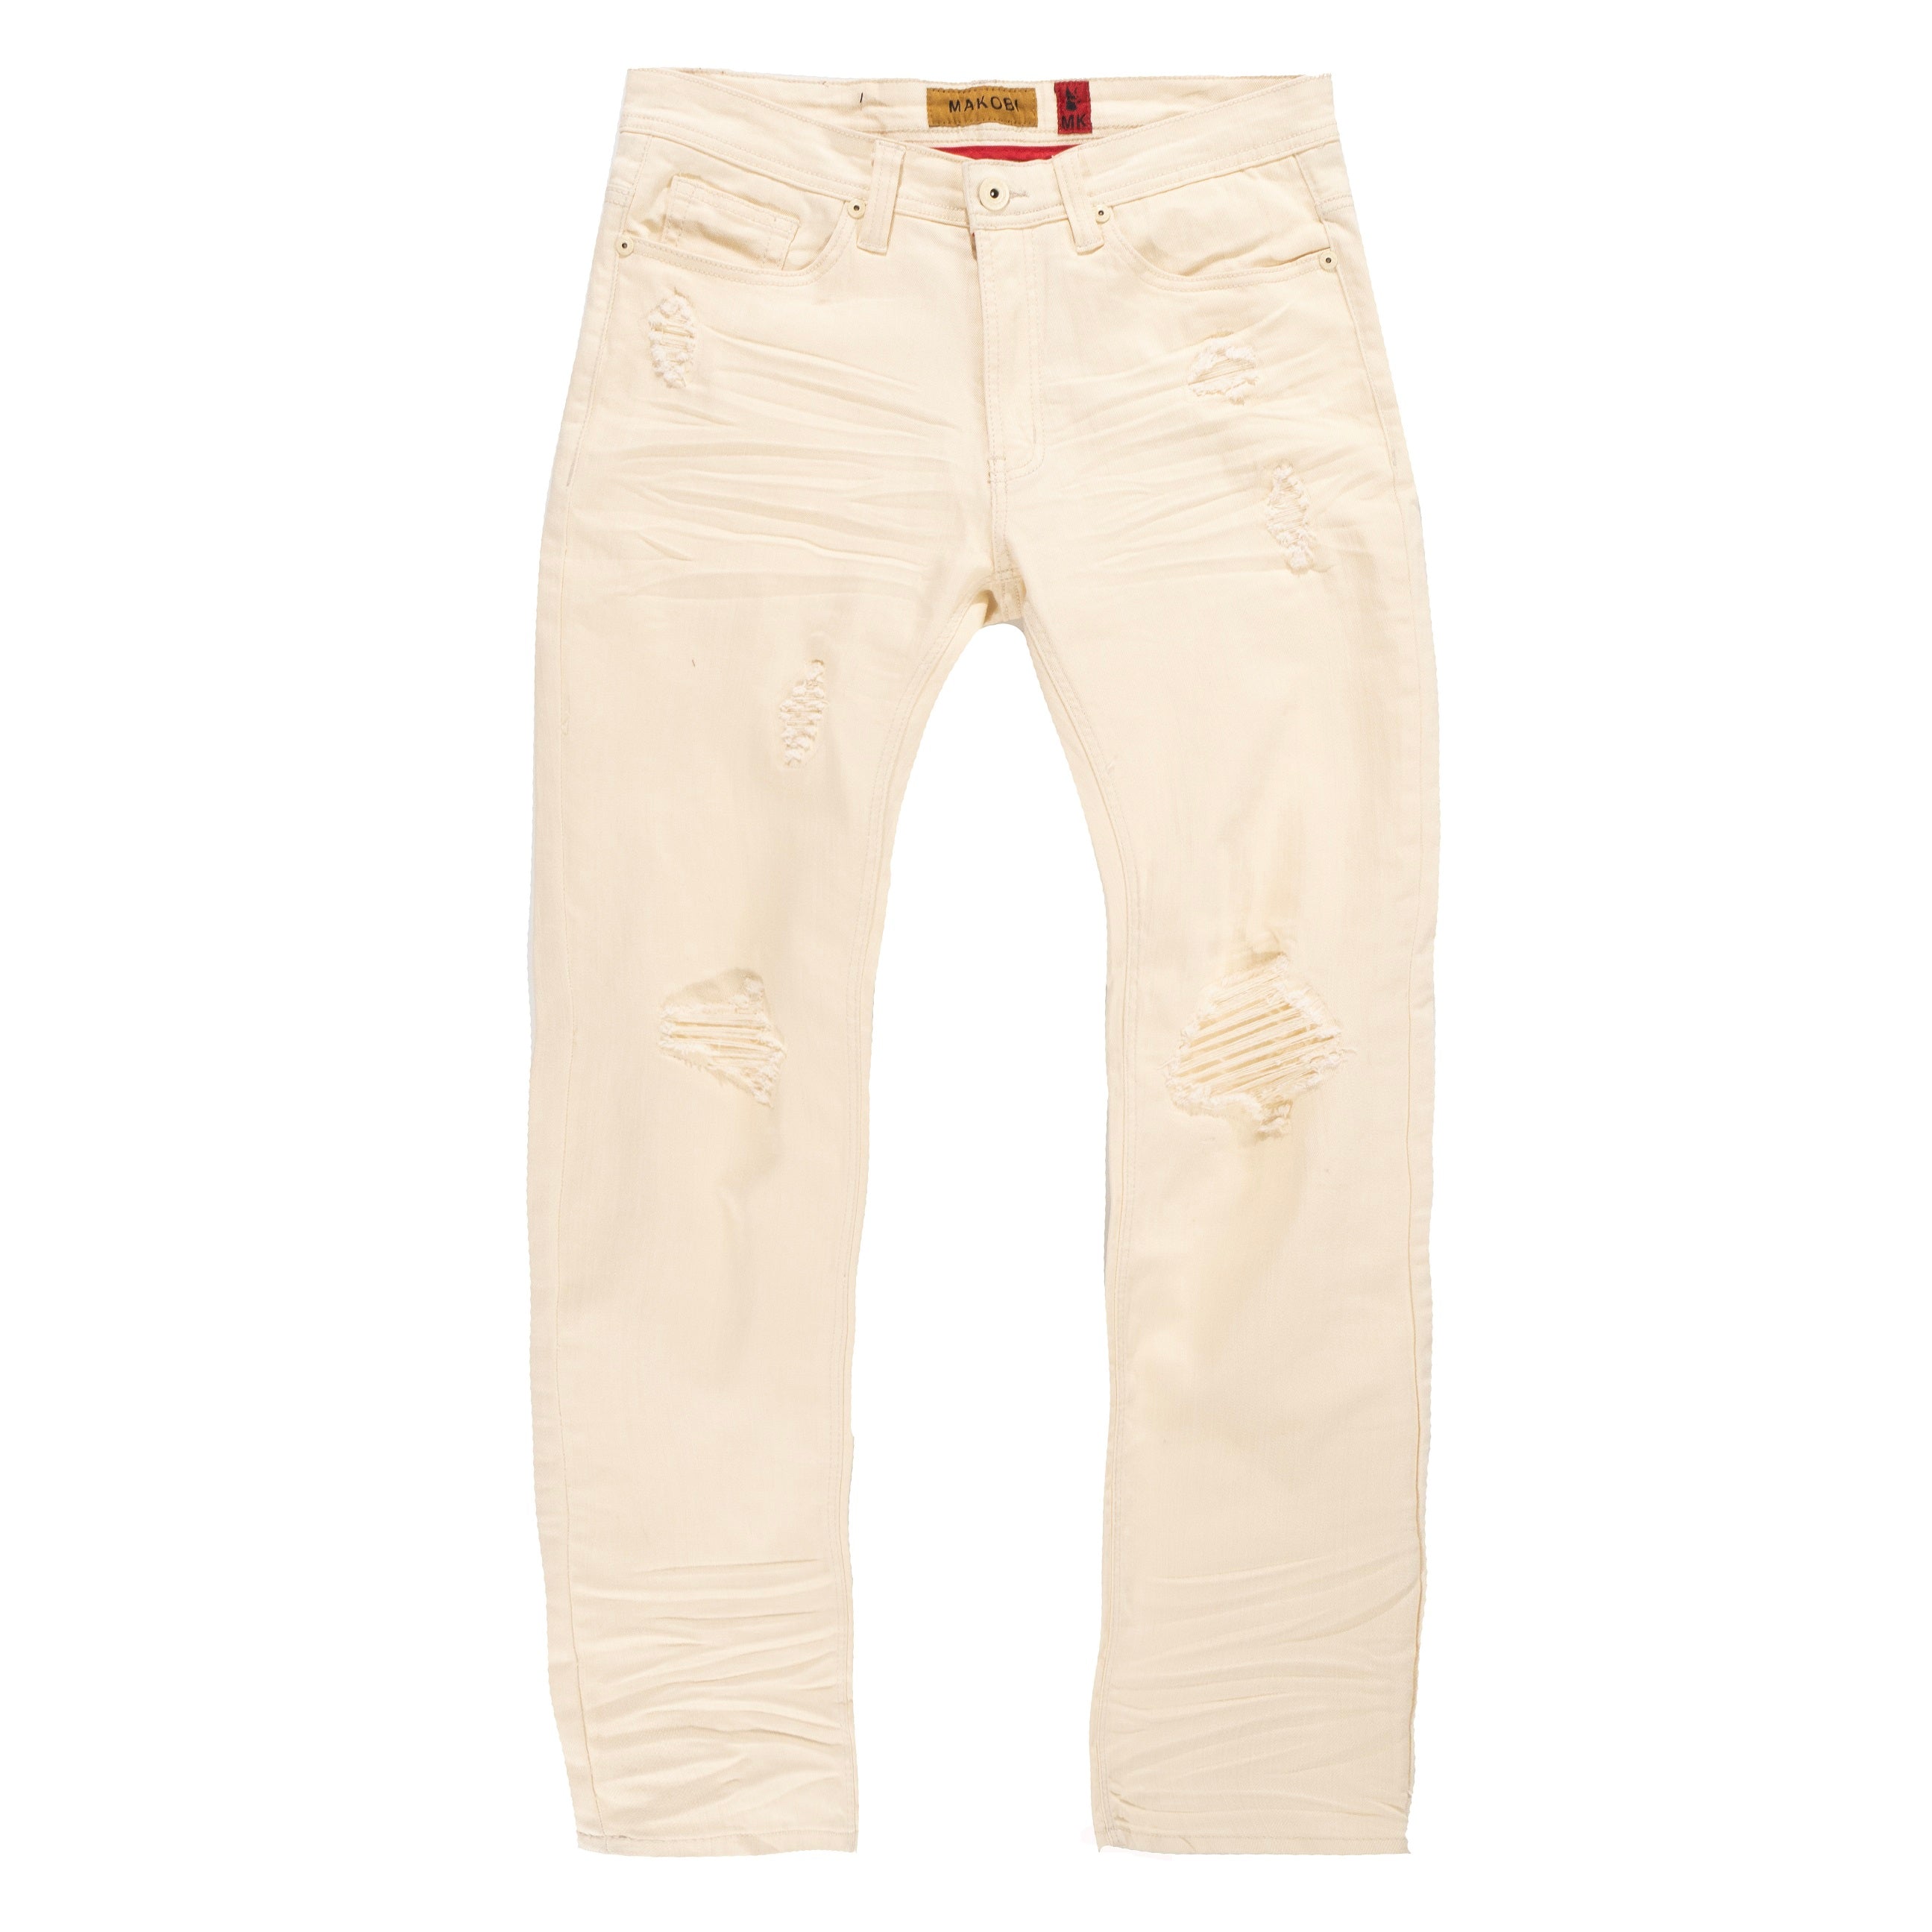 M1932 Makobi Brighton Shredded Twill Jeans - Natural